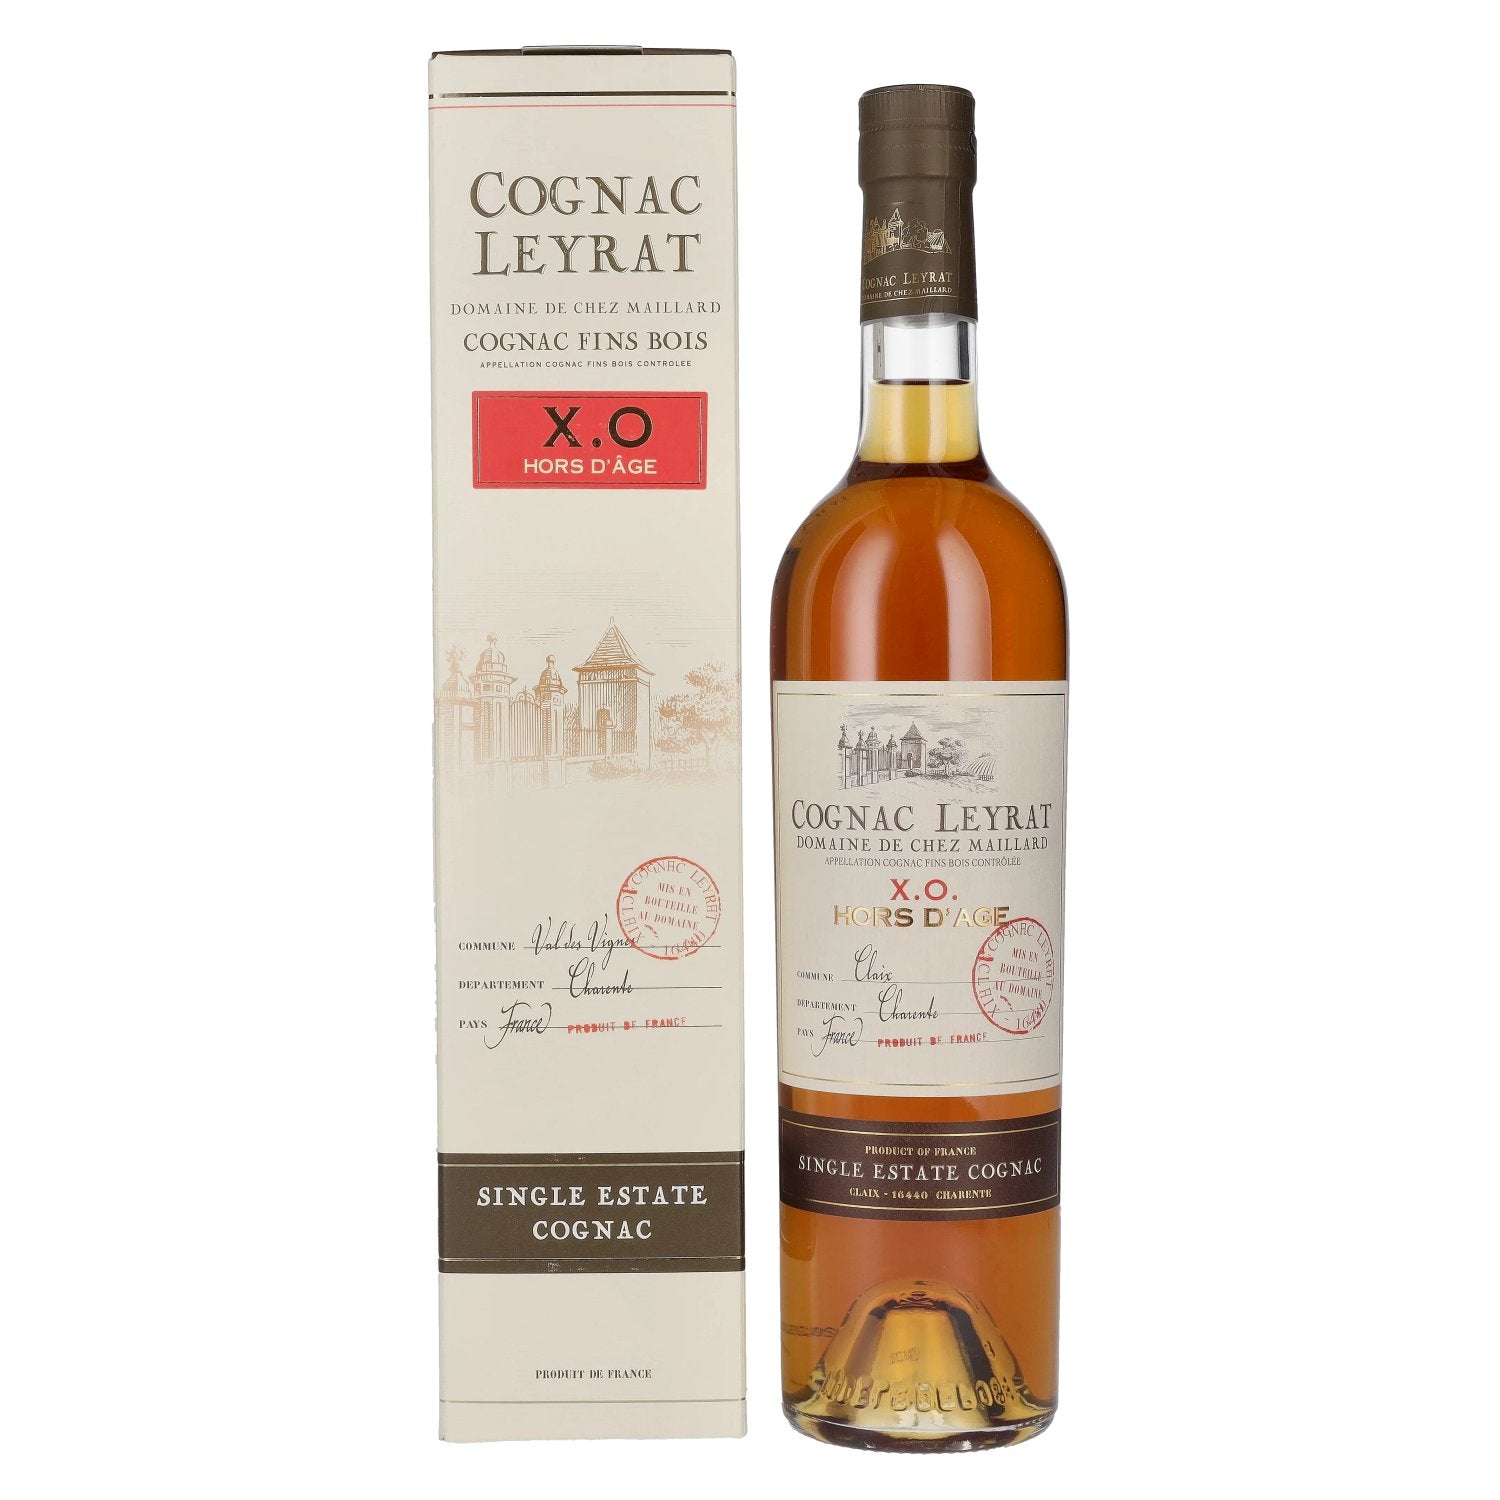 Cognac Leyrat X.O. Hors D'Age Single Estate Cognac 40% Vol. 0,7l in Giftbox